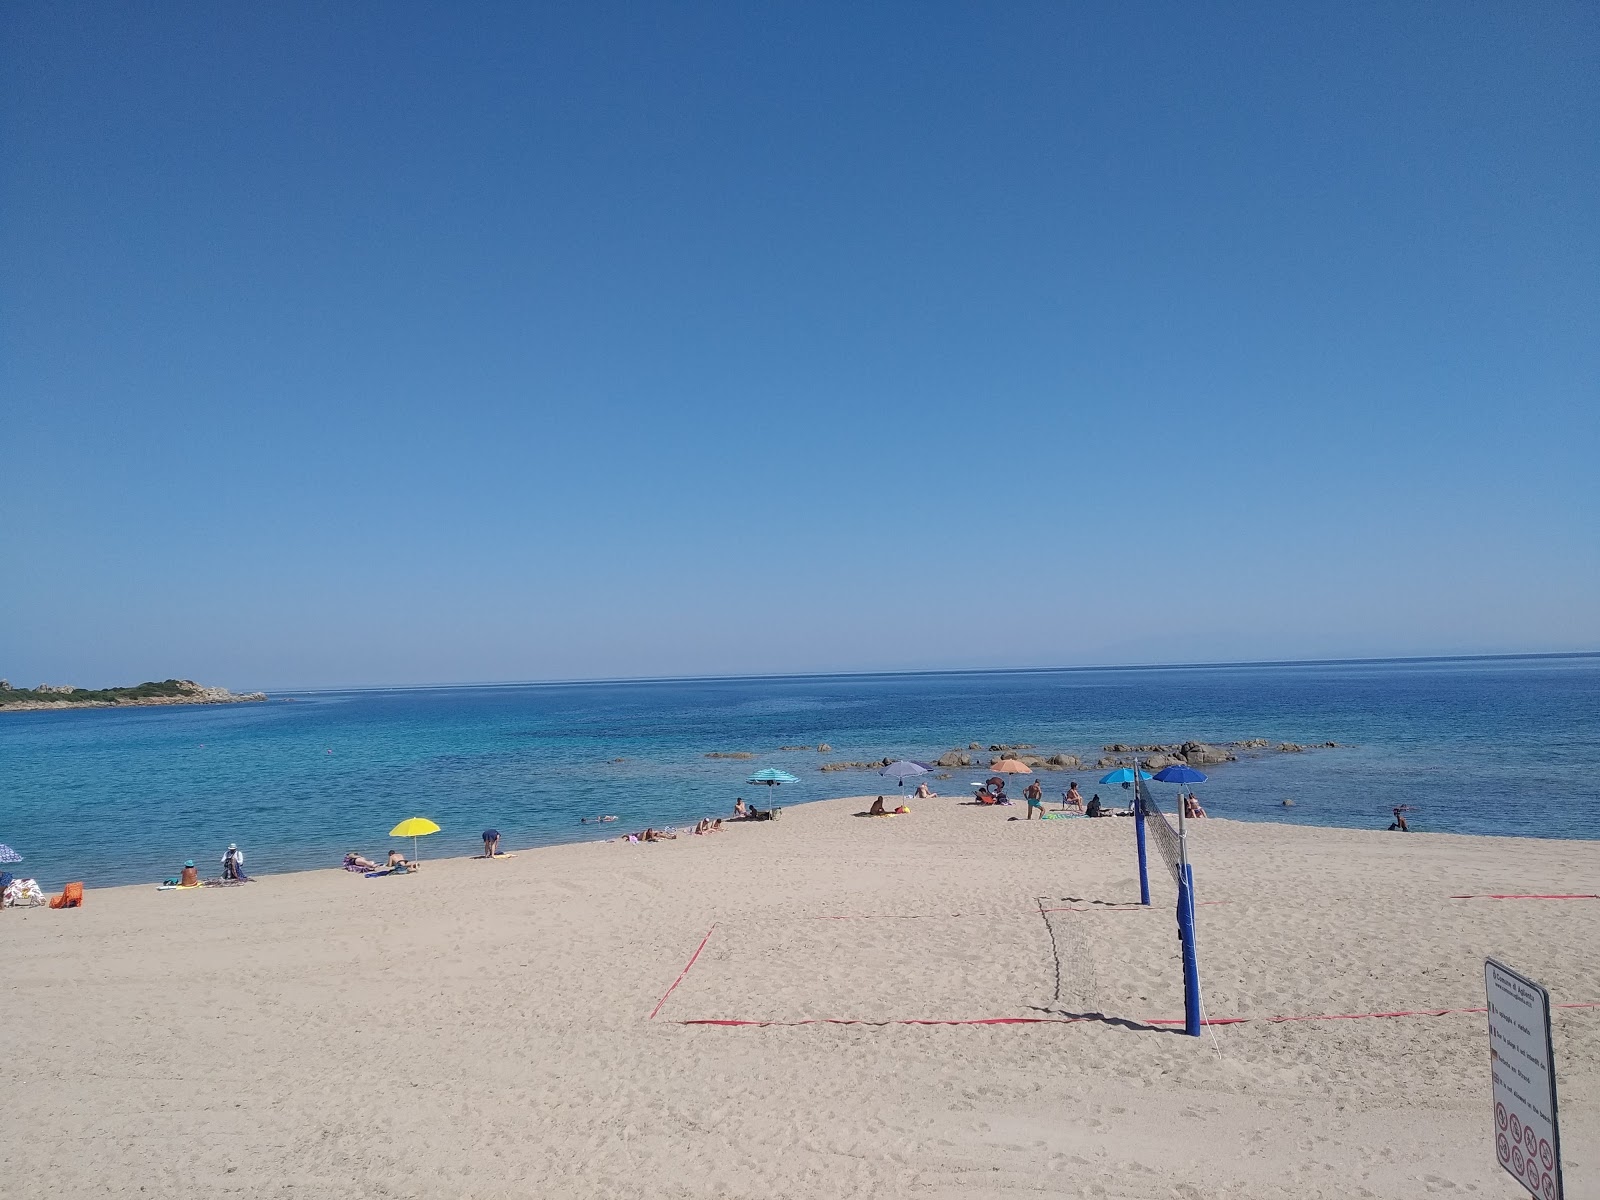 Foto de Spiaggia di Vignola - lugar popular entre os apreciadores de relaxamento